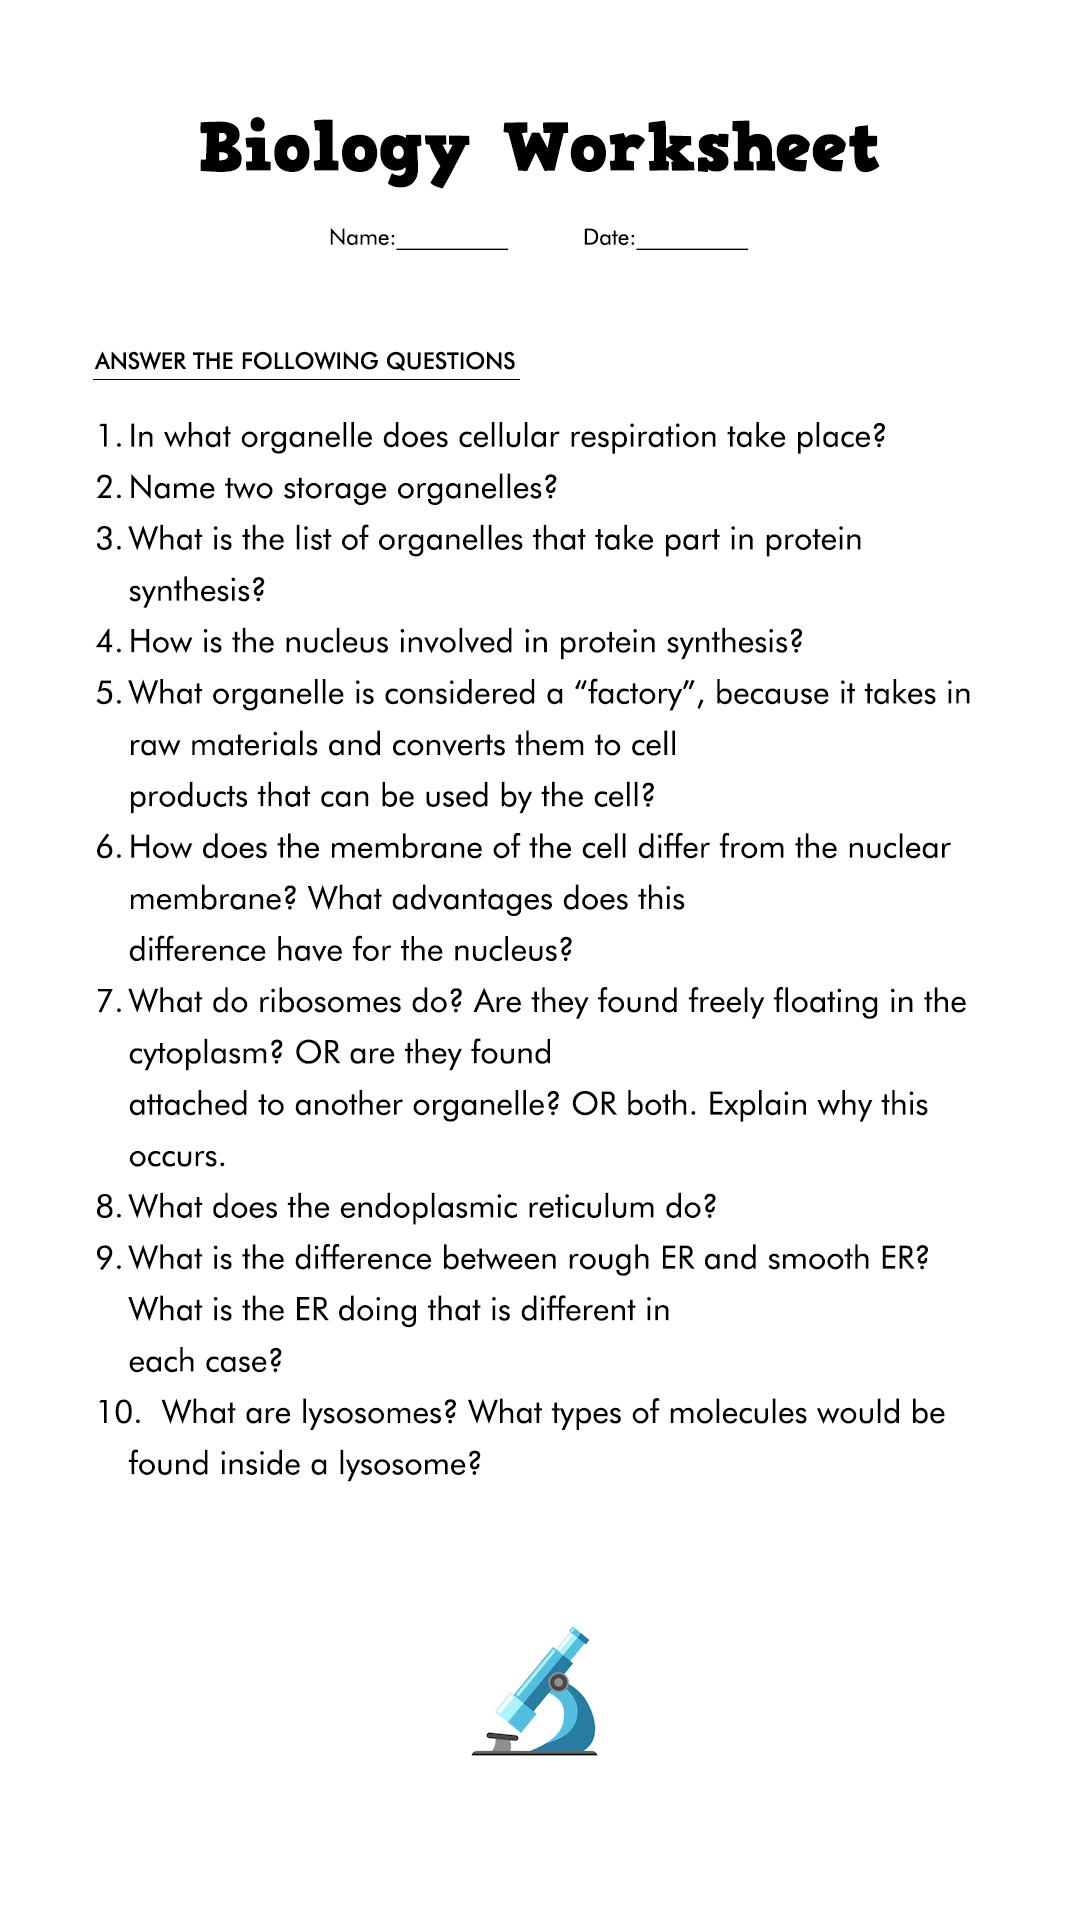 Biology Cell Worksheets